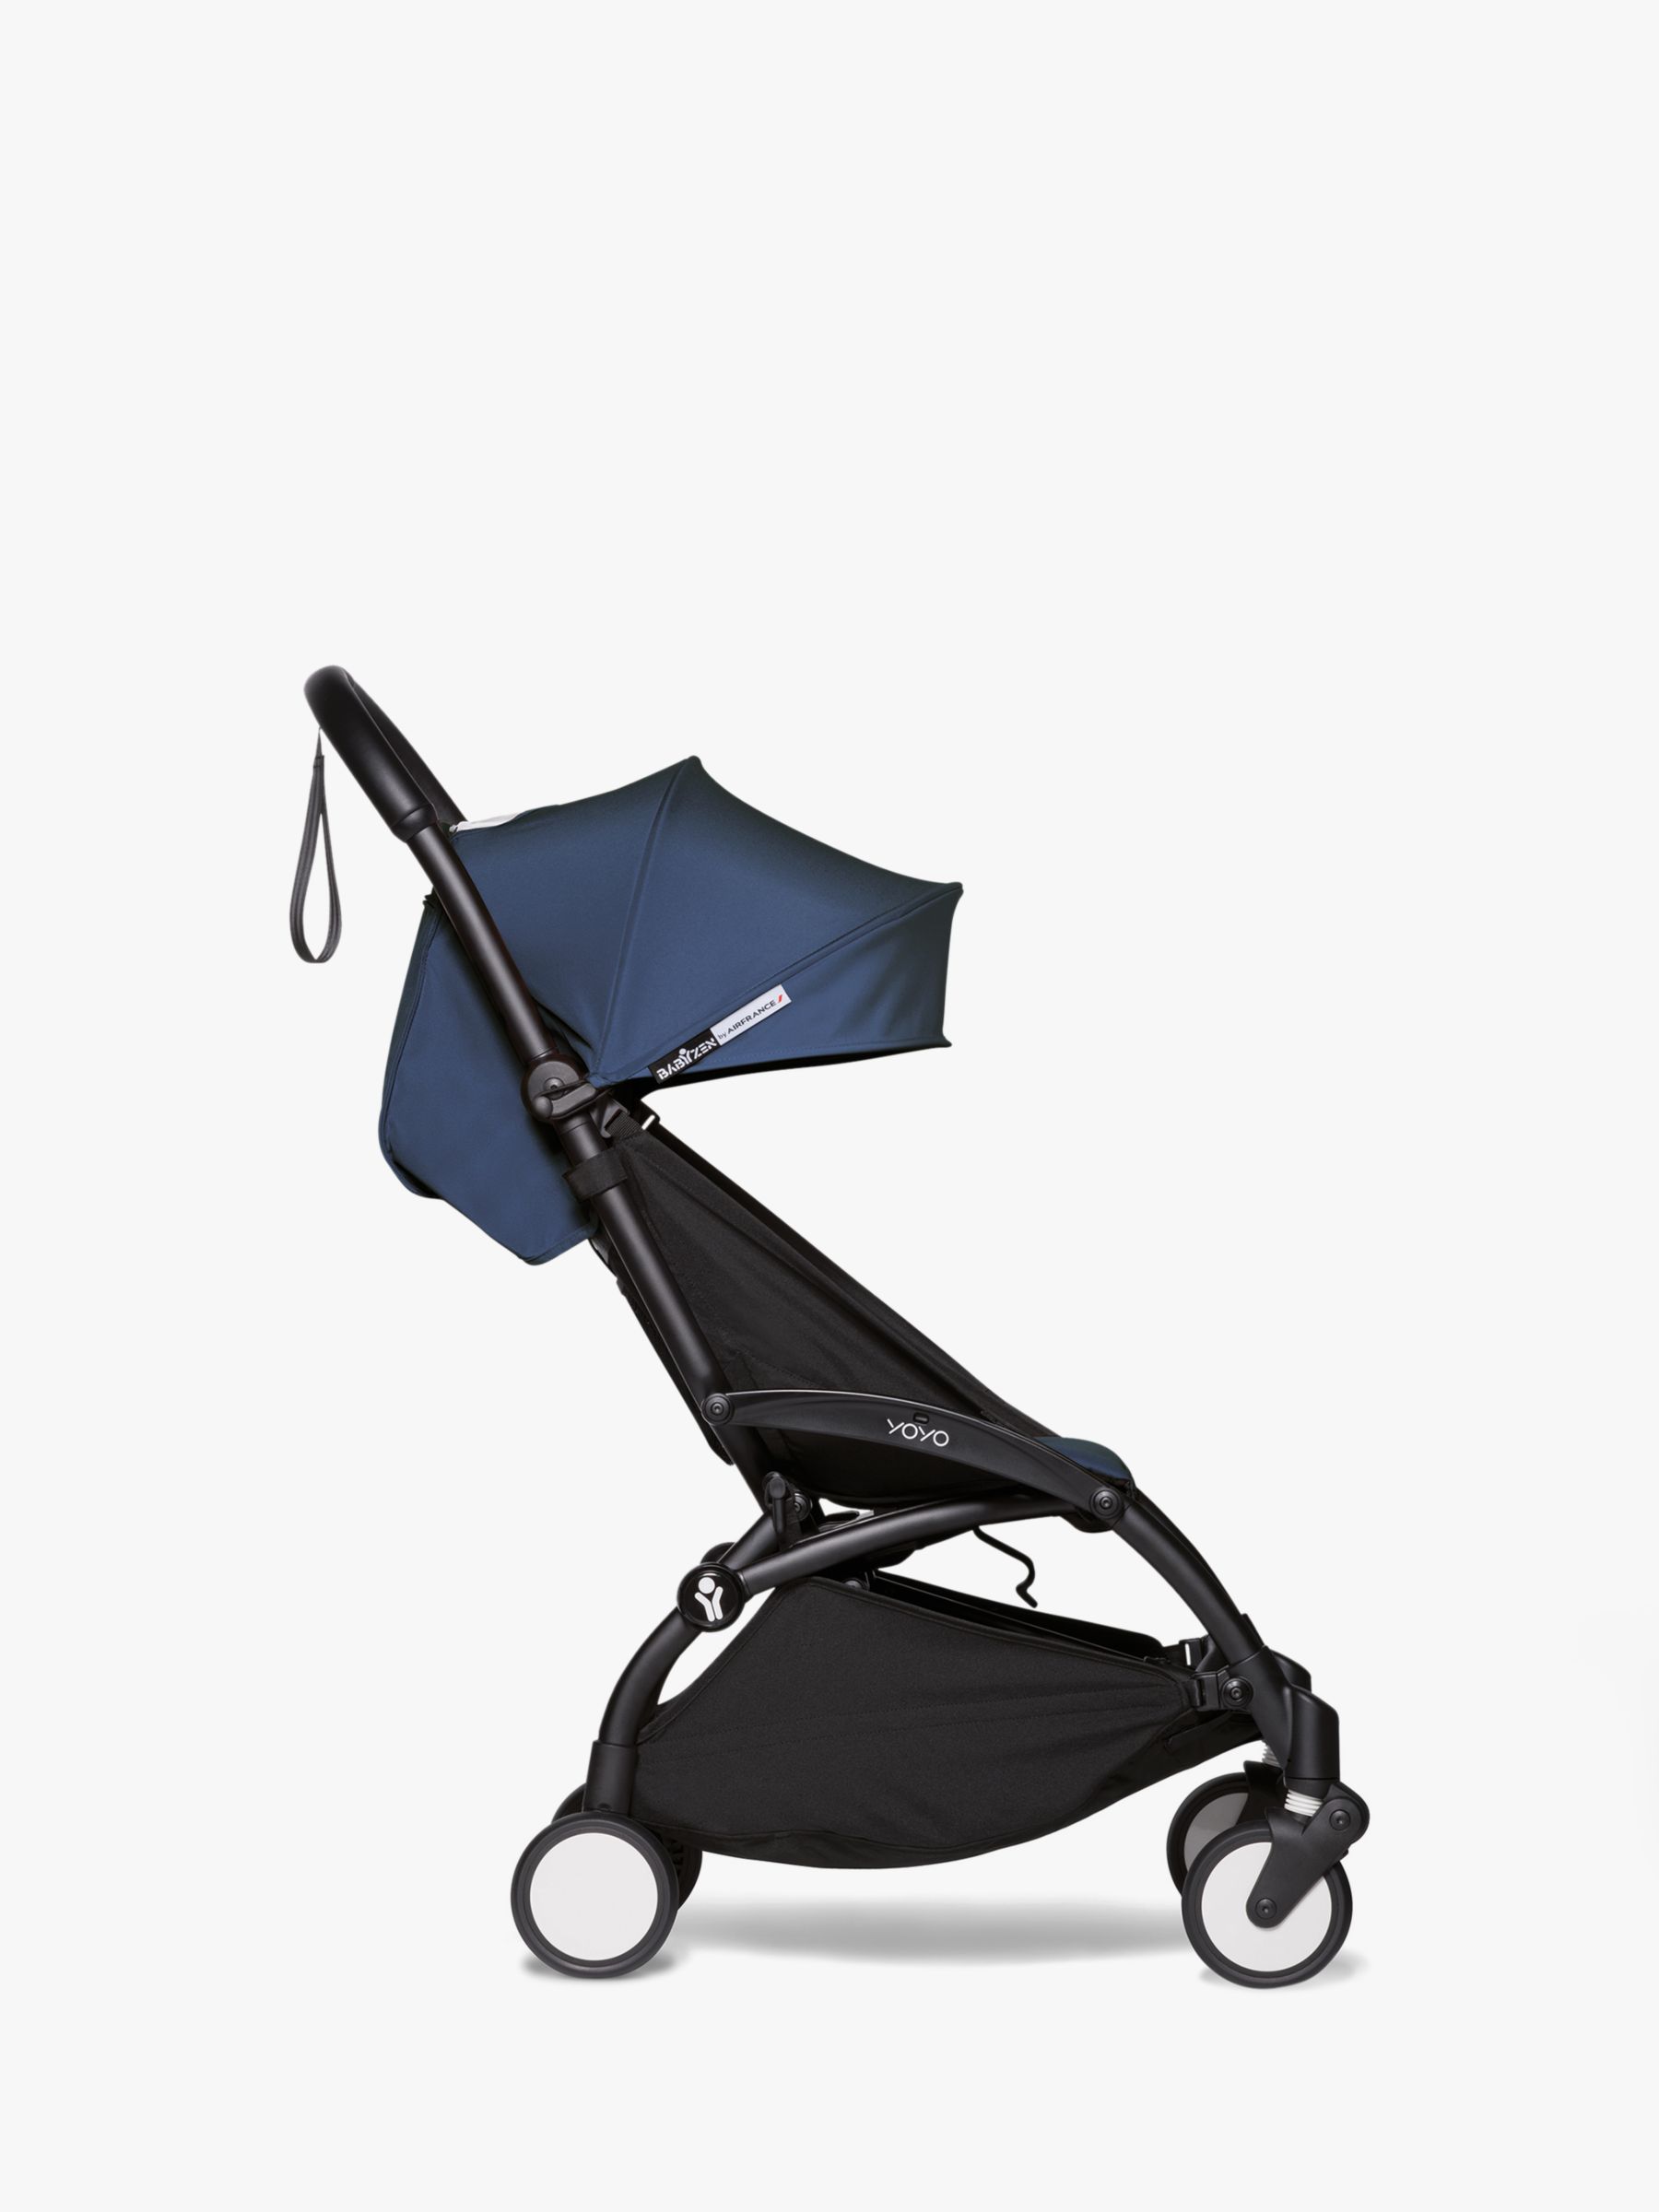 BABYZEN YOYO² Chassis, Newborn Kit & Colour Pack Bundle, Black/Air France Blue